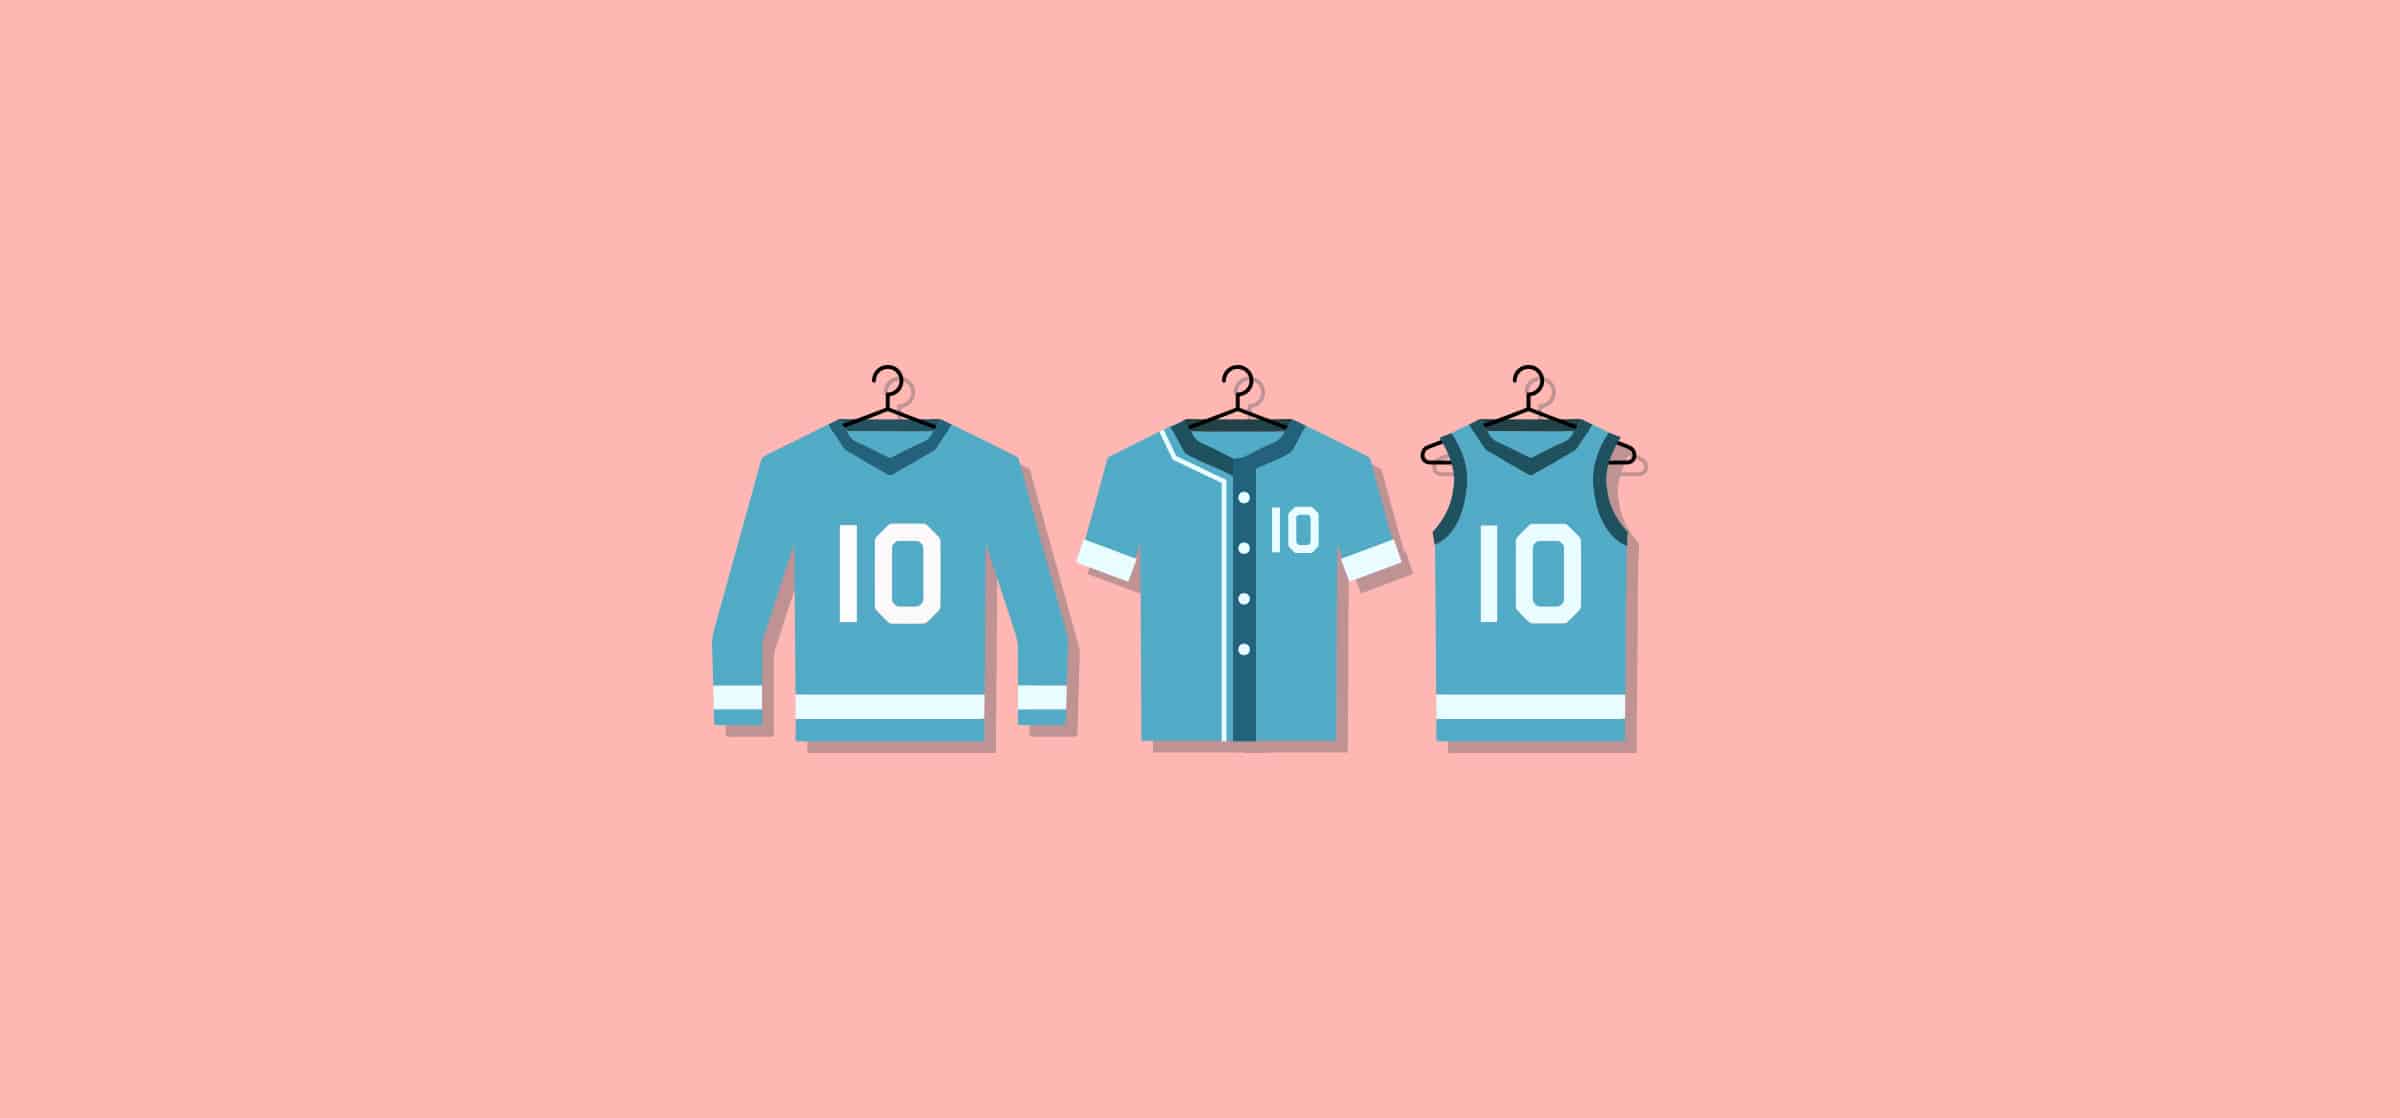 Jerseys for hockey, baseball, and basketball, representing a cross functional team